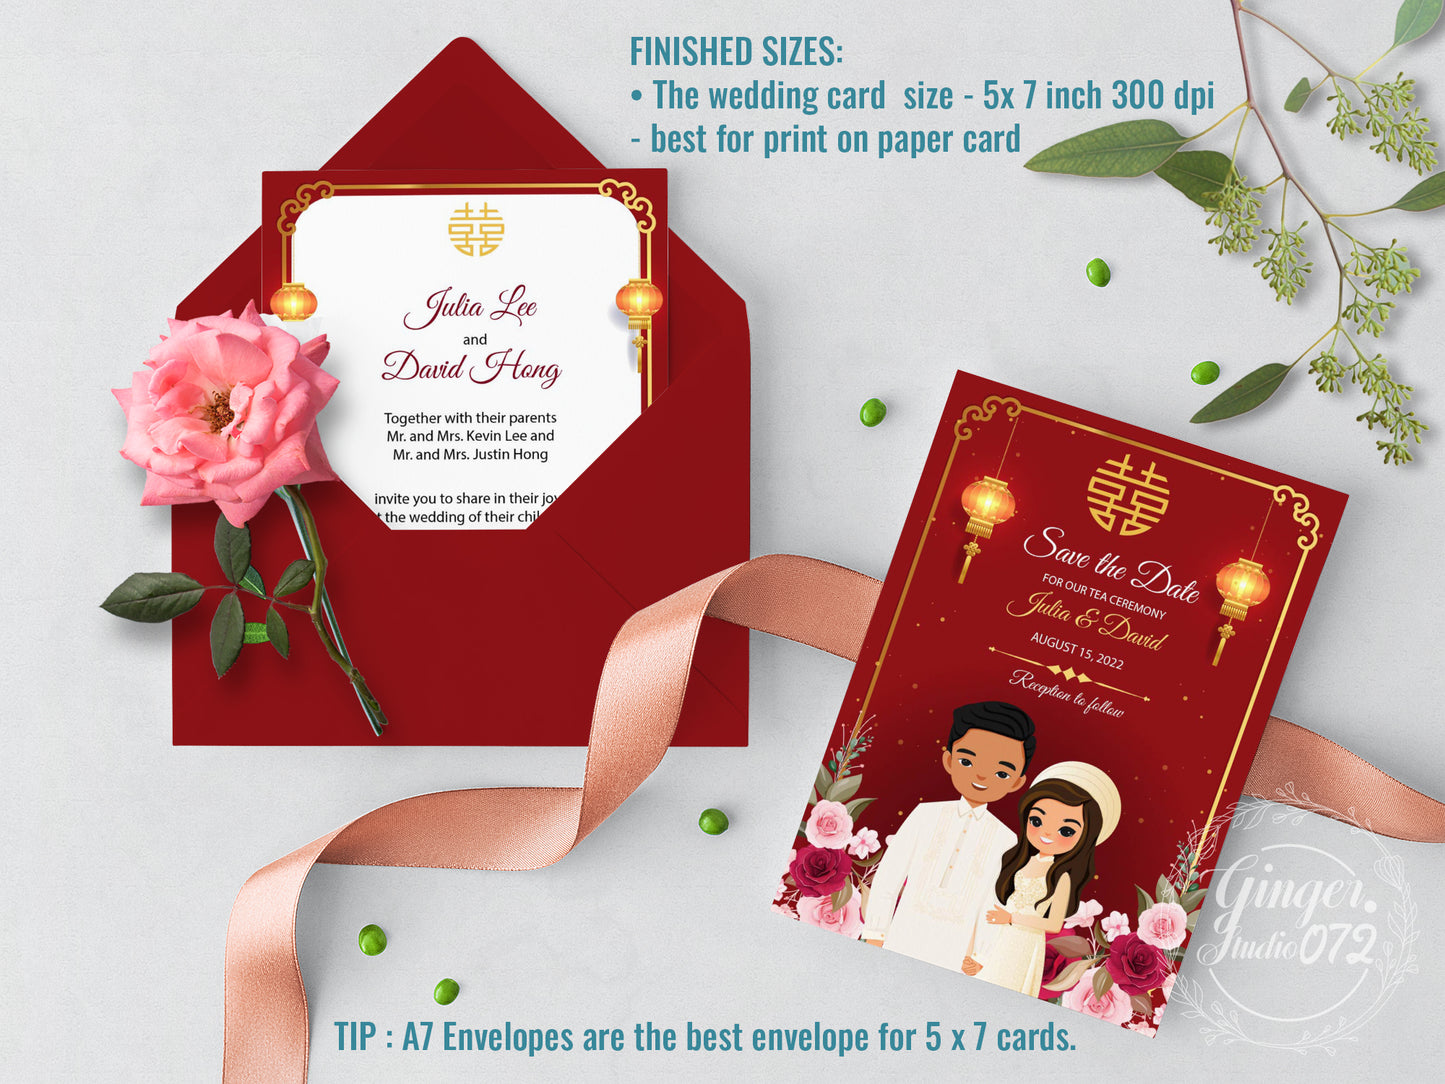 Cute Vietnamese wedding invite, Áo dài theme, Customize Invite Template #cvwk220603